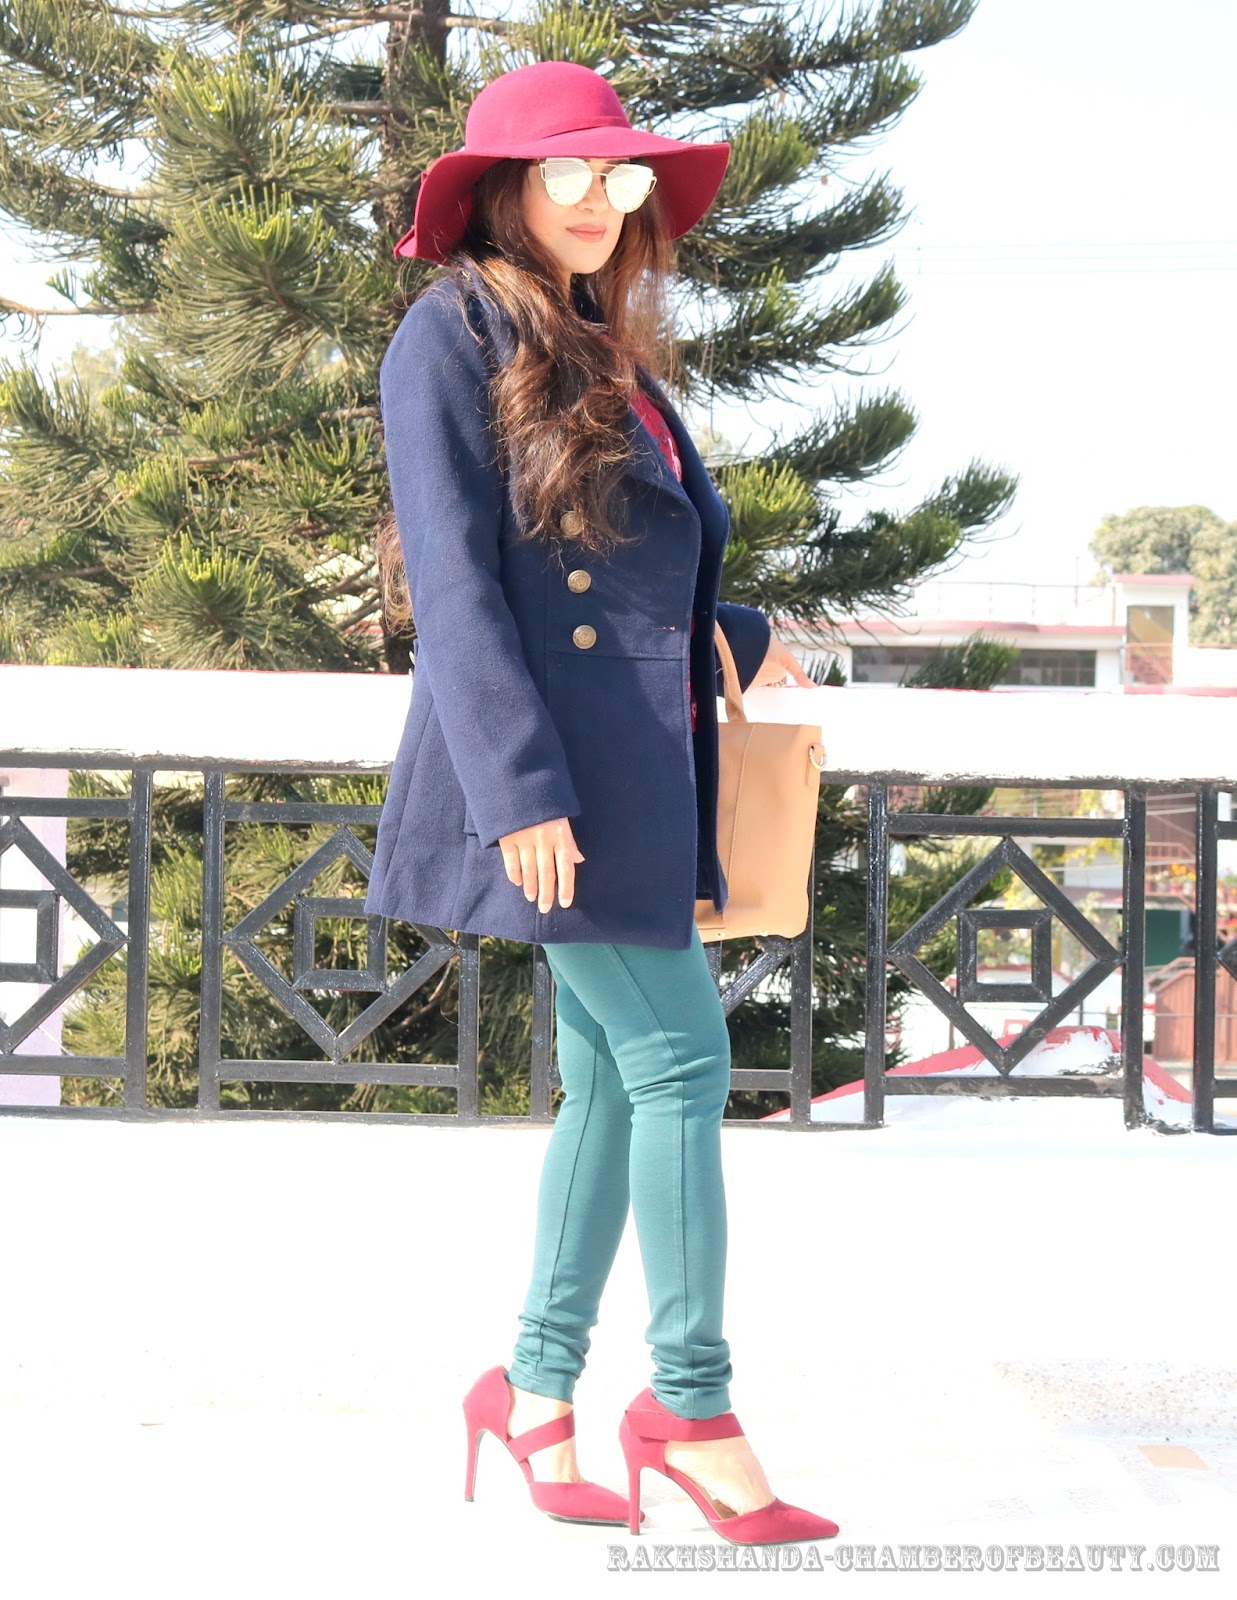 Fashion blogger/rakhshanda-chamberofbeauty/Max fashion/how to style printed shirt in winter